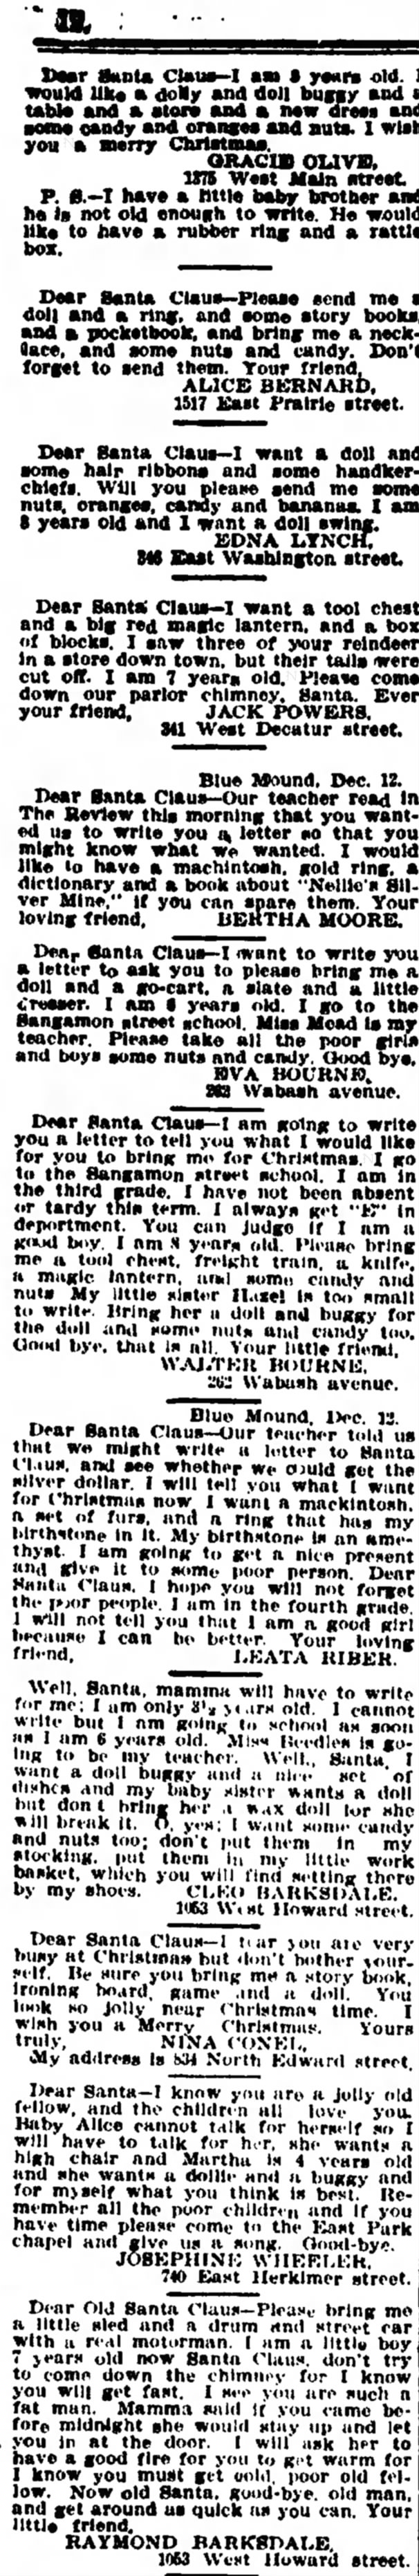 The Daily Review (Decatur, IL), Dec. 19, 1902, p. 4